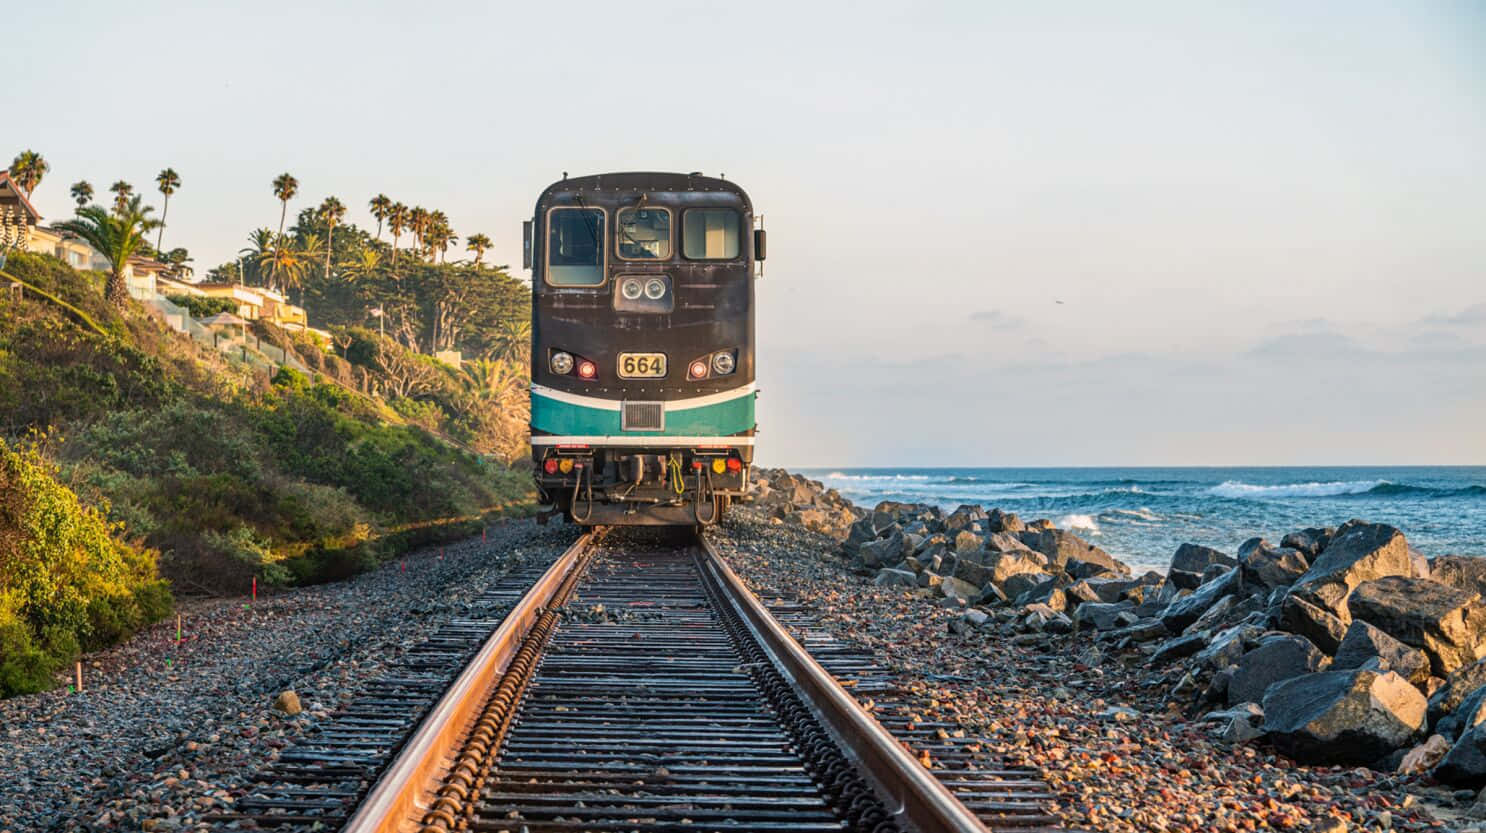 A Train Traveling Along The Tracks Near The Ocean